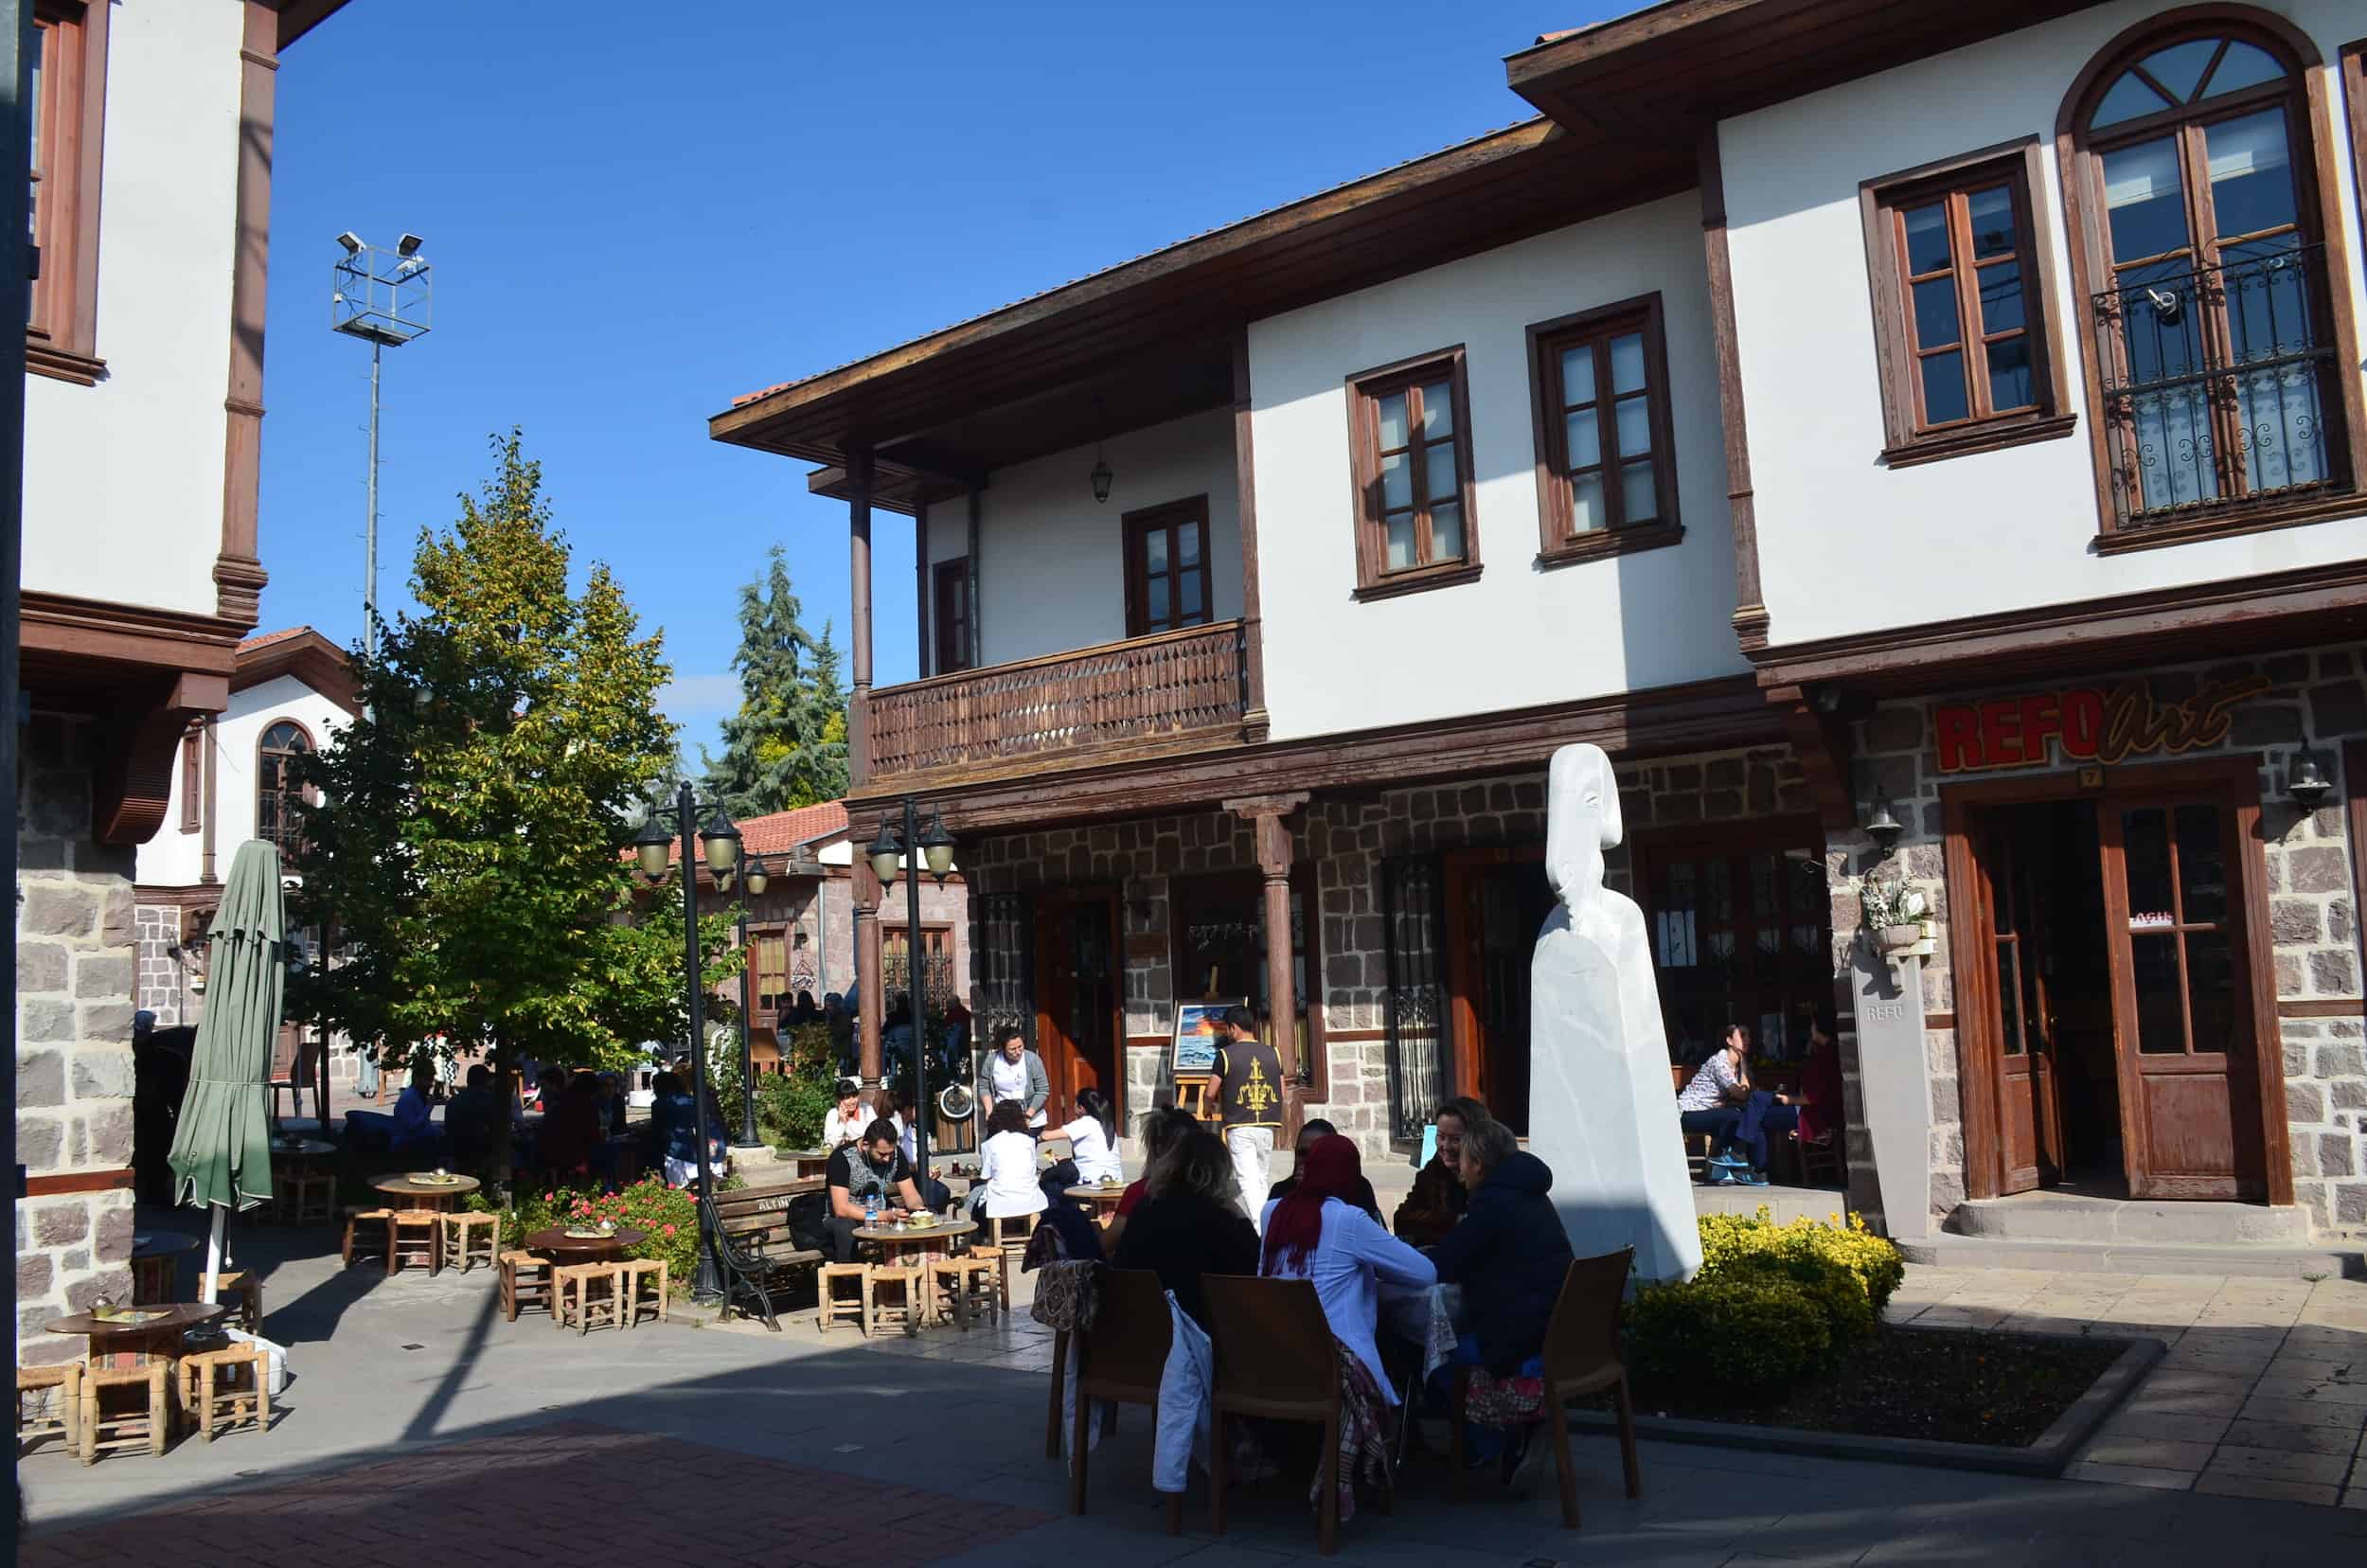 Small square with an outdoor café in Hamamönü, Ankara, Turkey